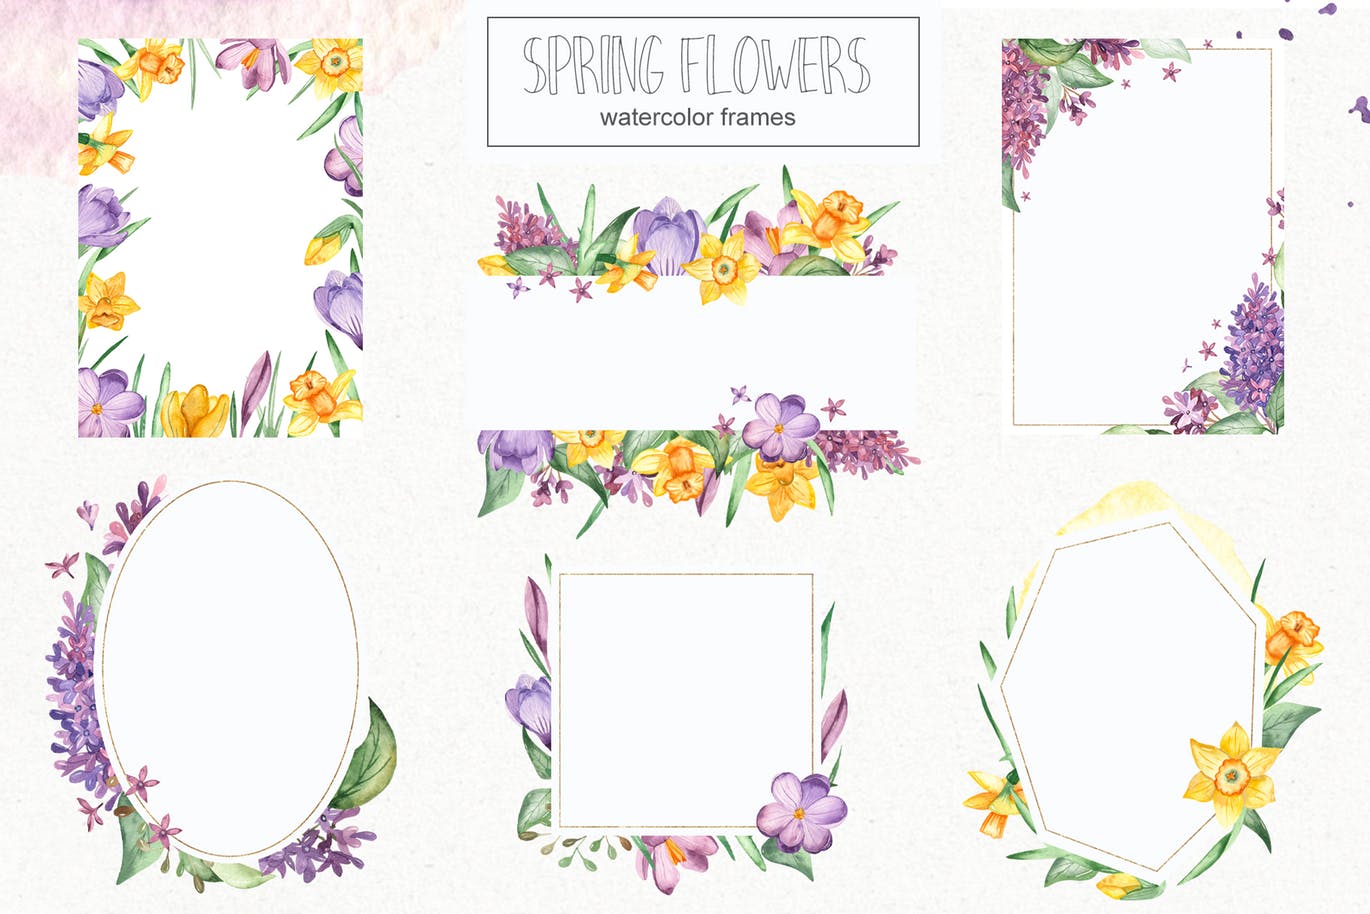 春季花卉水彩素材套装 Watercolor spring flowers collection插图3